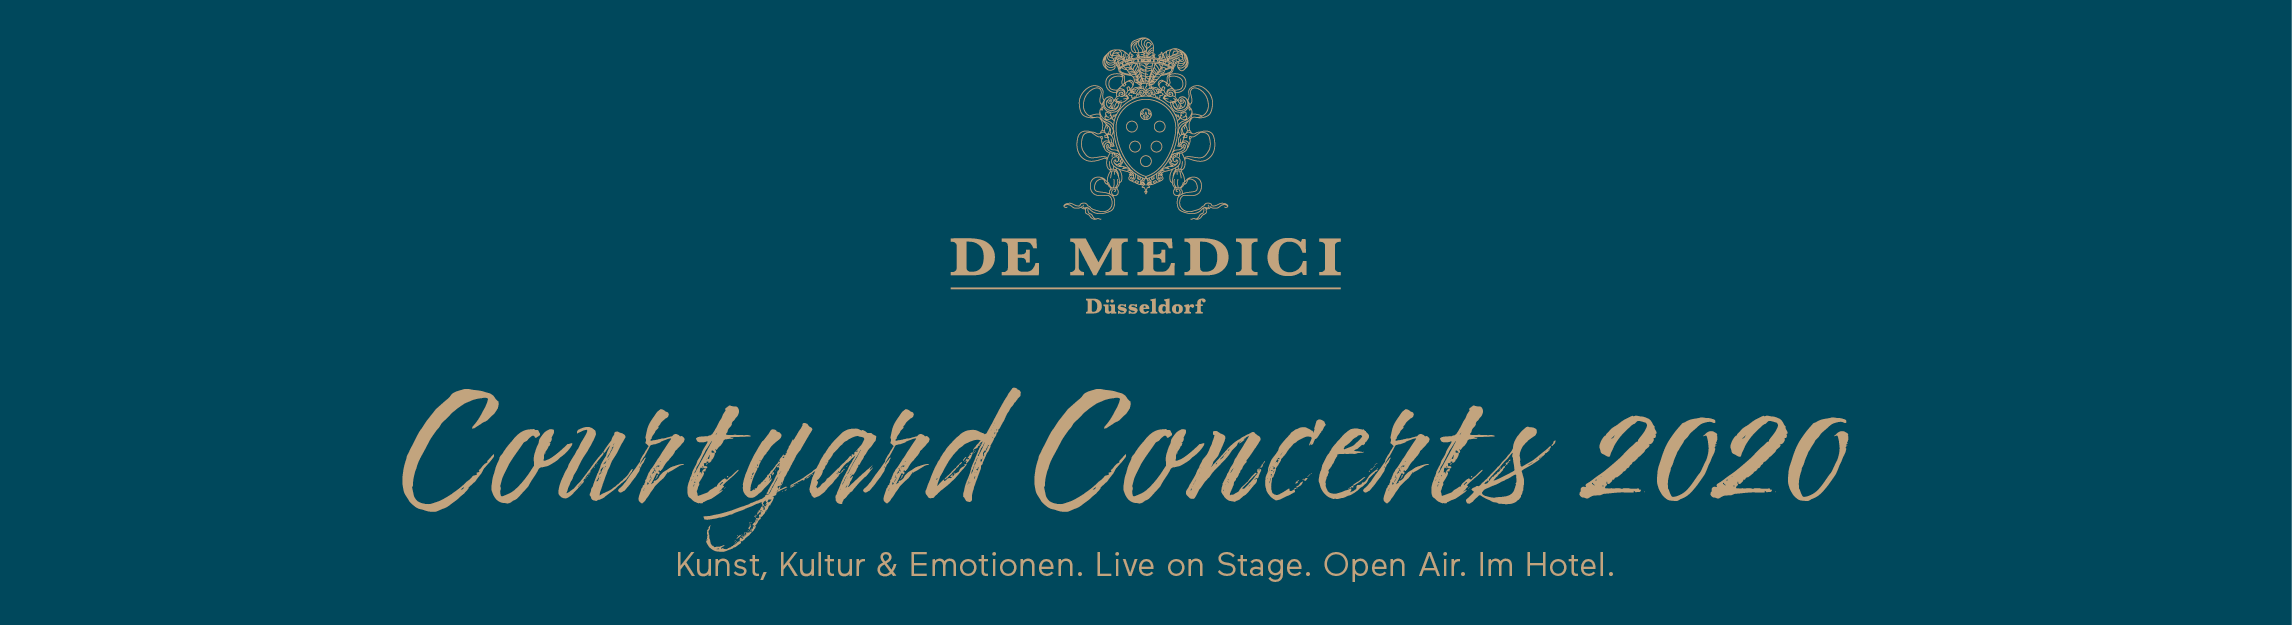 Living Hotel De Medici Düsseldorf Courtyard Concerts